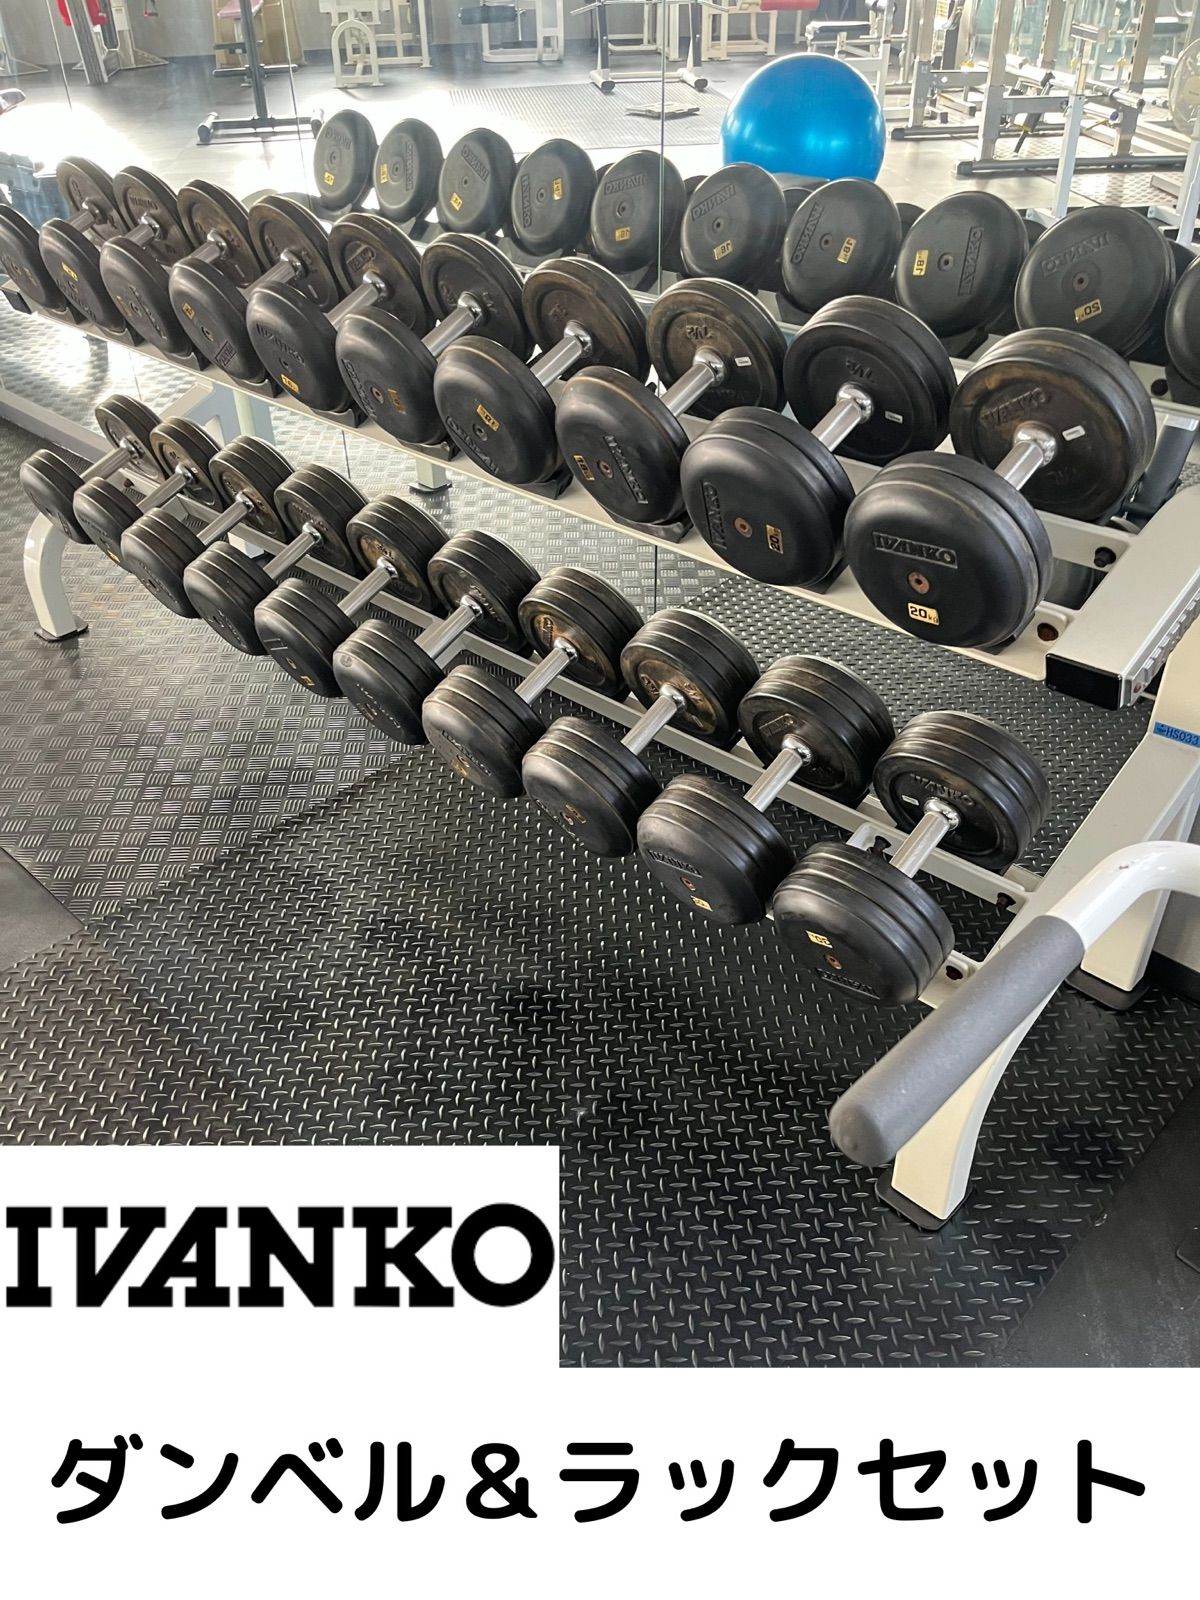 IVANKO 2段ダンベルラックセット 12kg〜30kg - メルカリShops